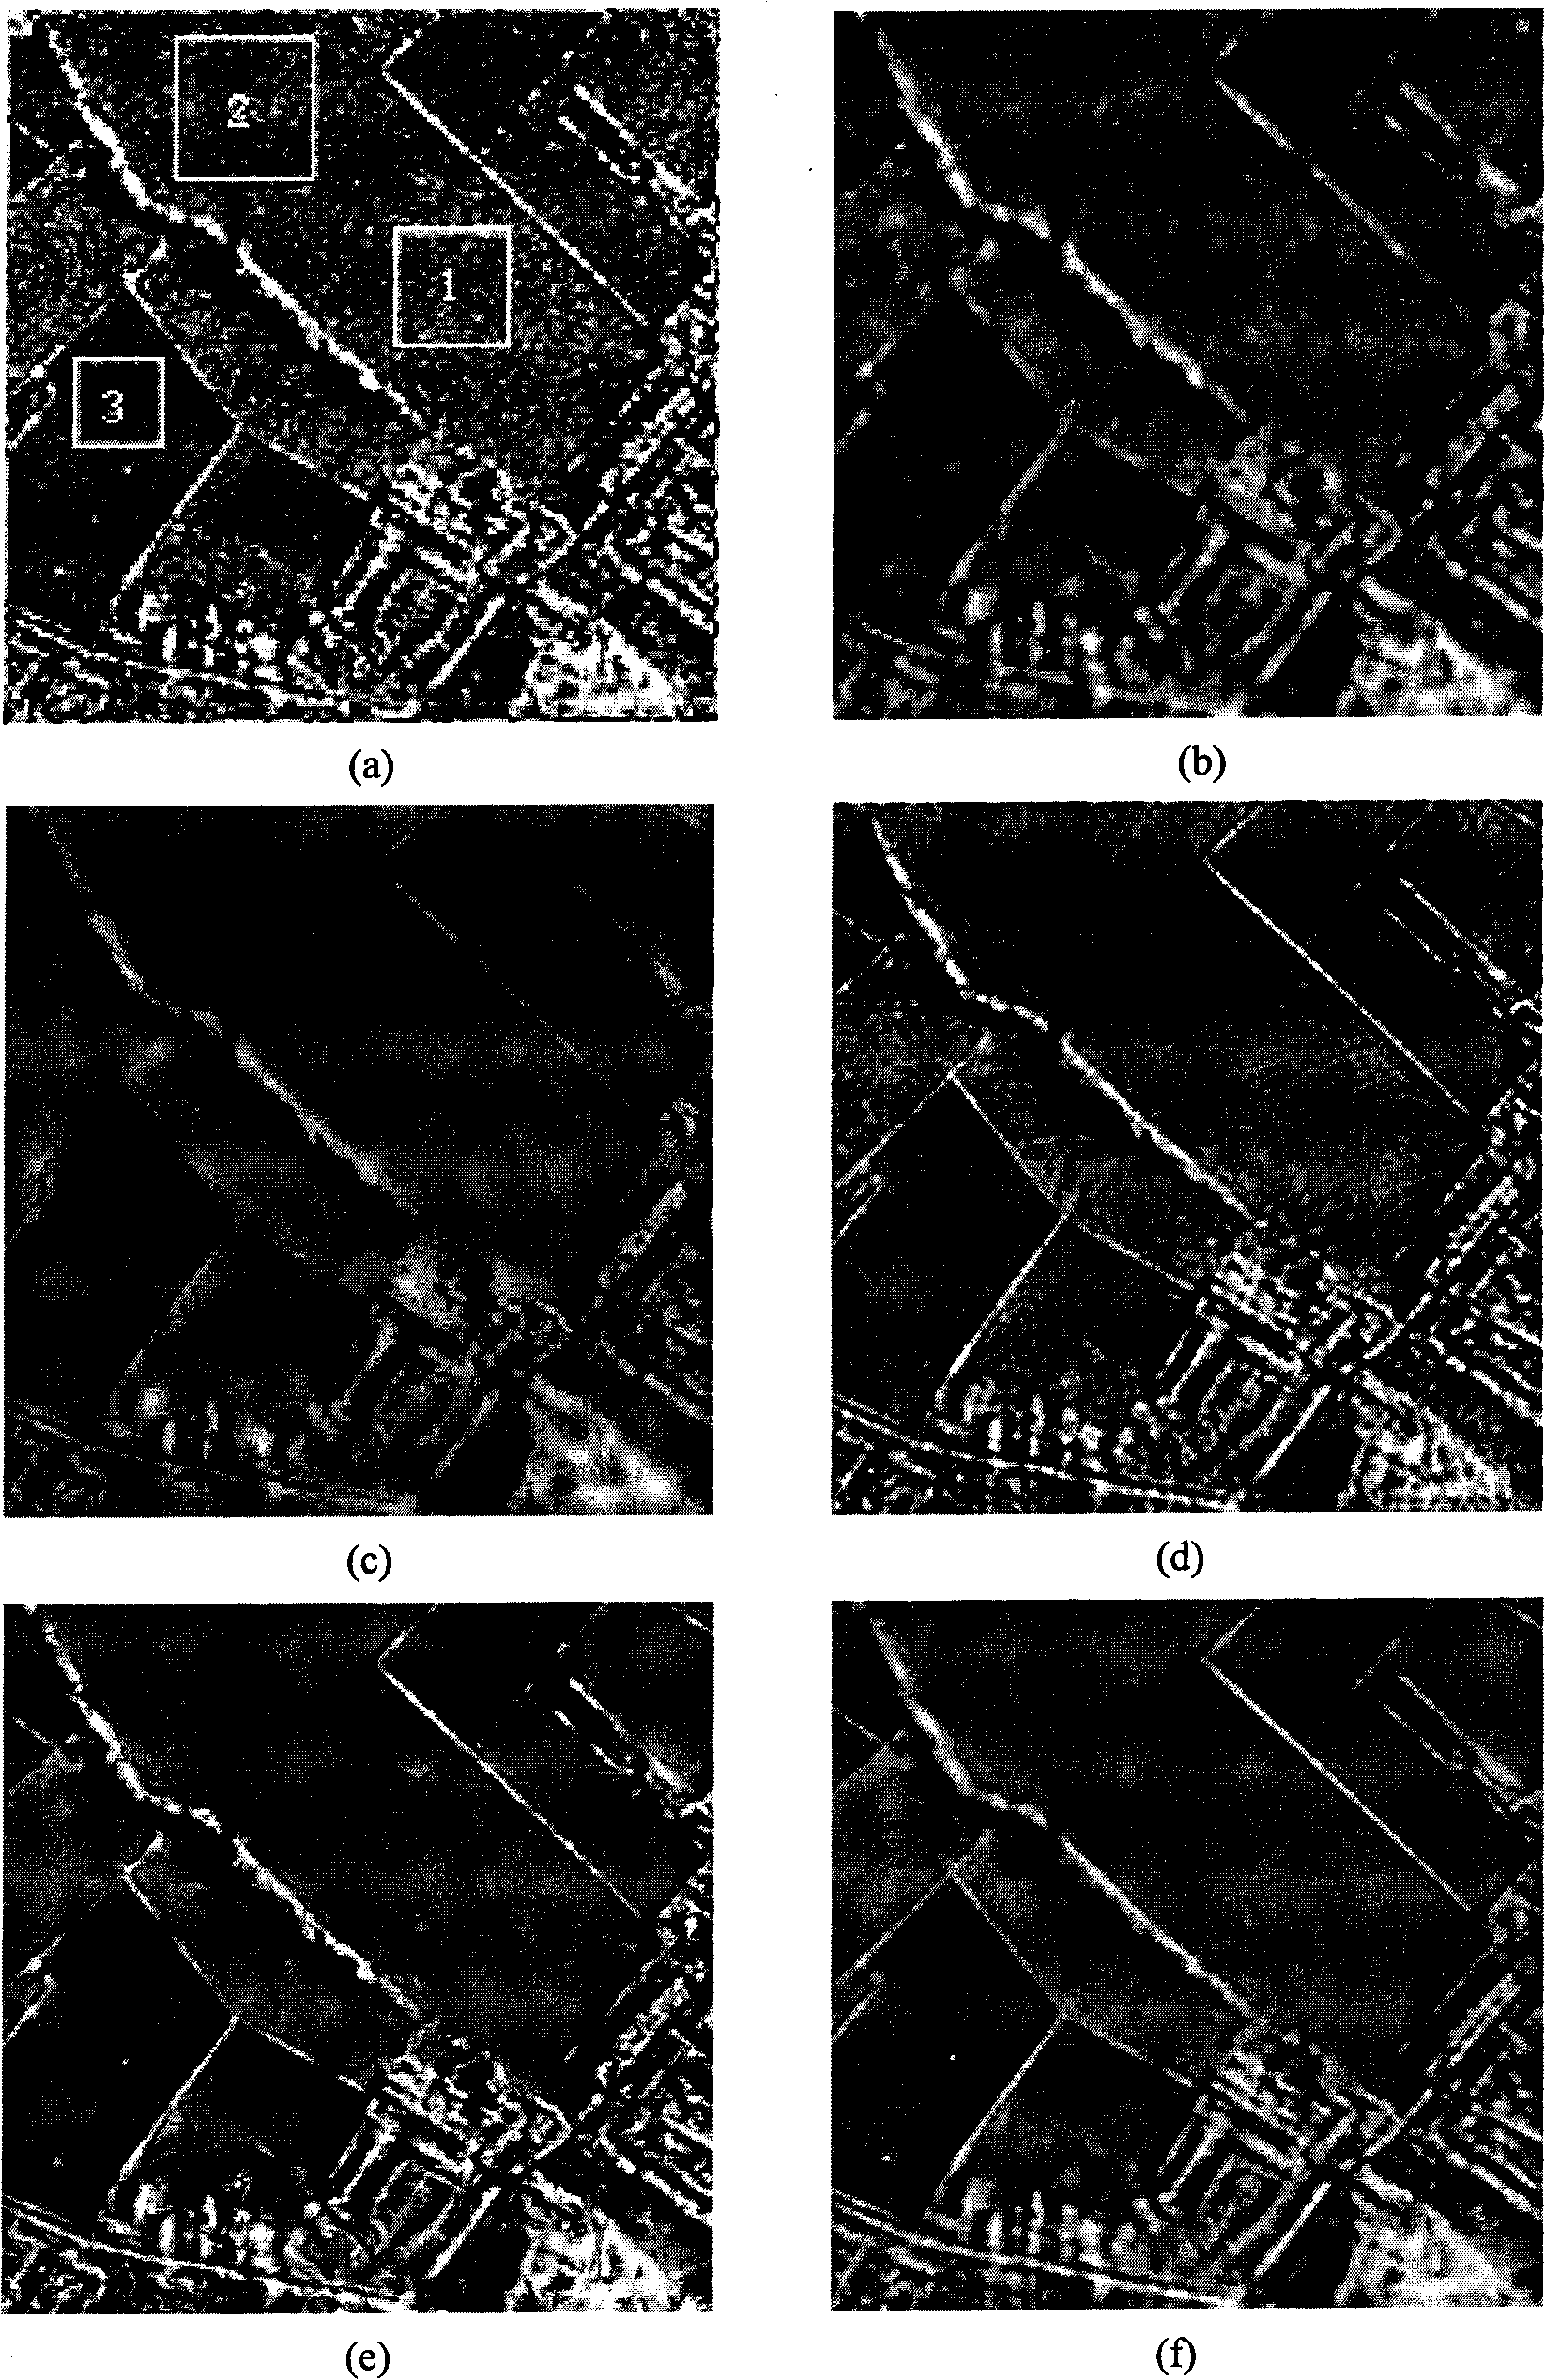 SAR image speckle suppression method based on second generation curvilinear wave transformation